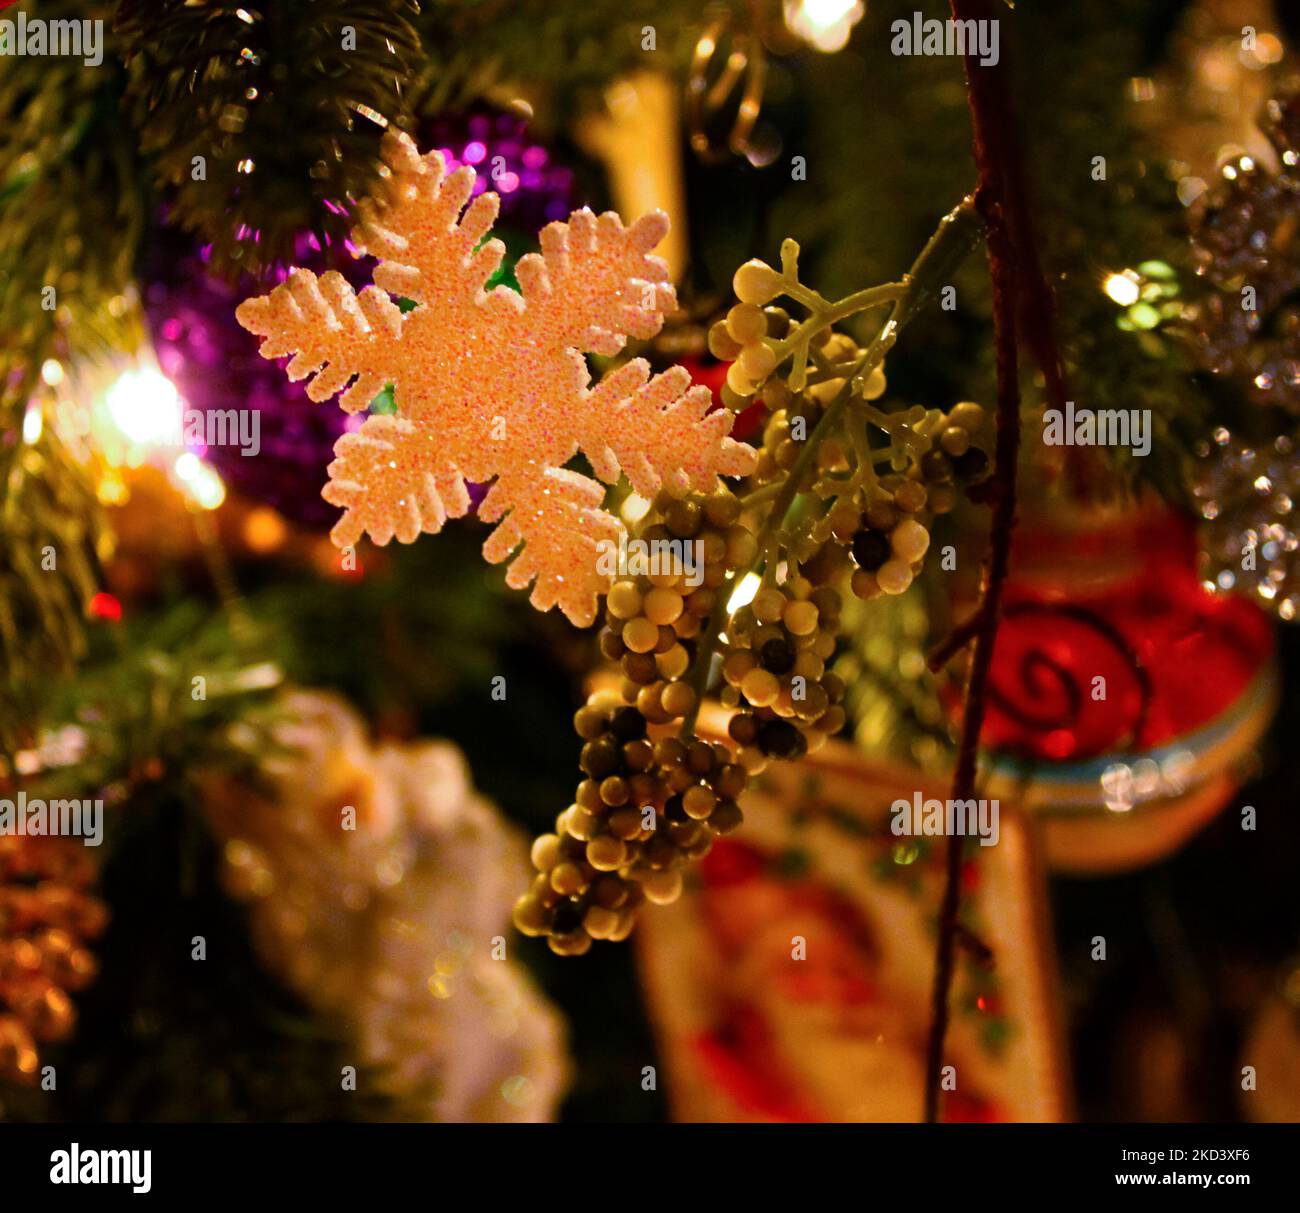 Fun, festive, handmade Christmas tree ornament of a woman's pink sports bra  Stock Photo - Alamy